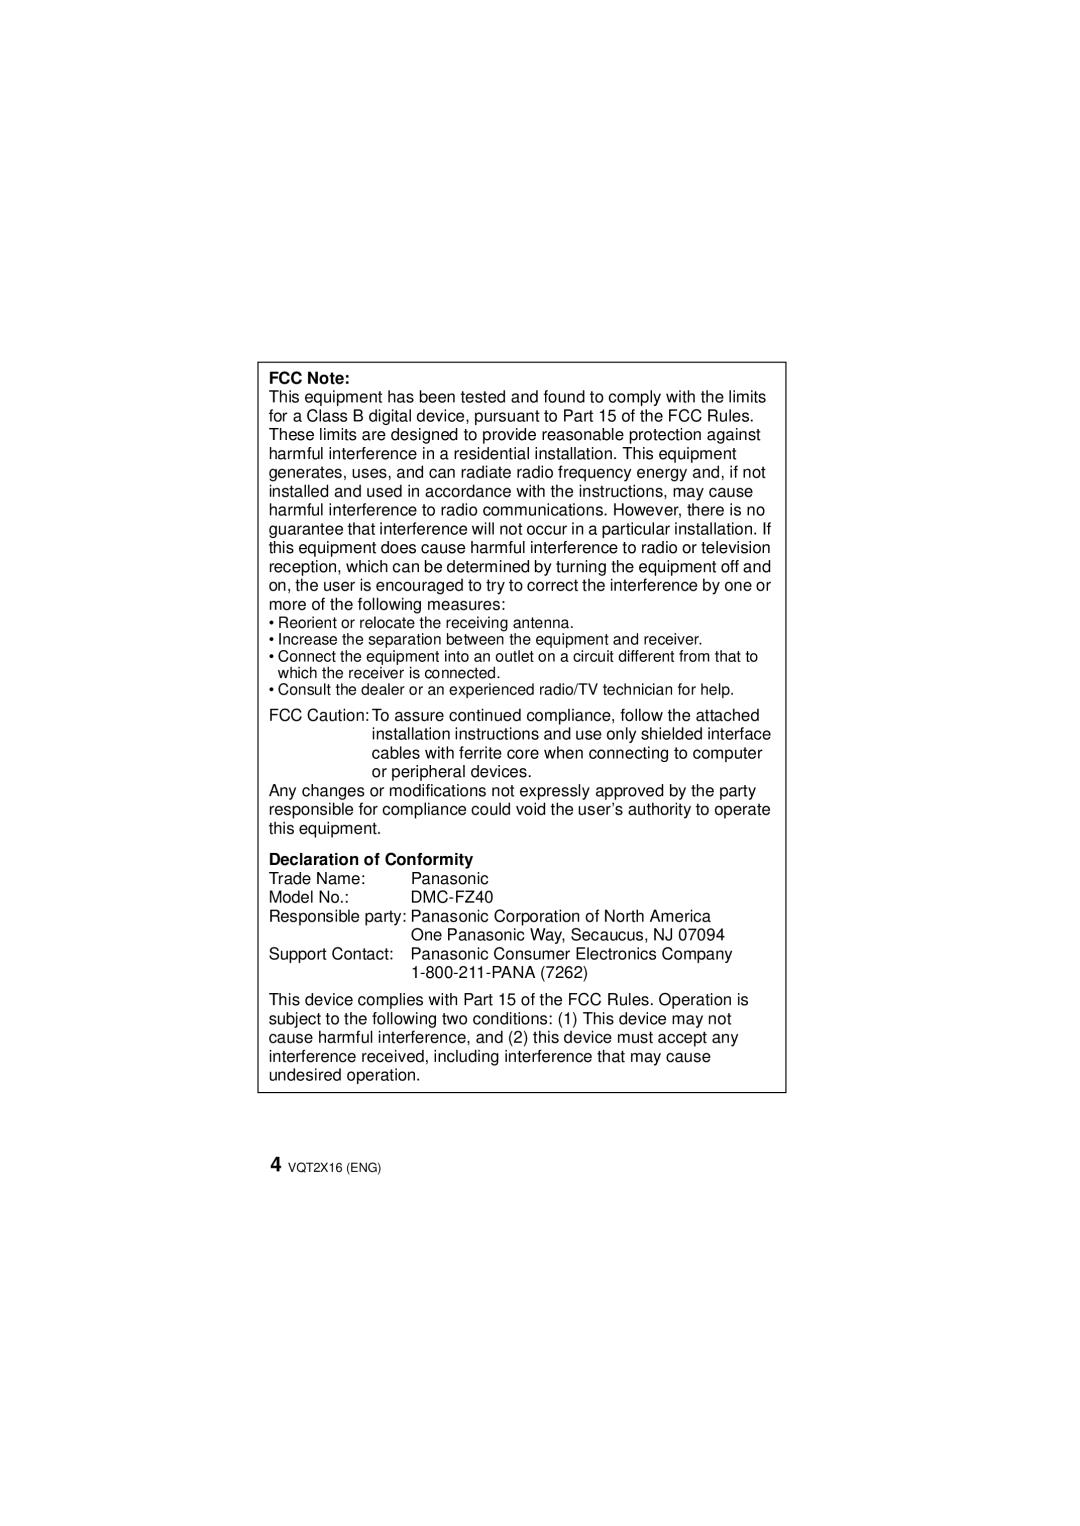 Panasonic DMC-FZ40, VQT2X16 operating instructions FCC Note, Declaration of Conformity 